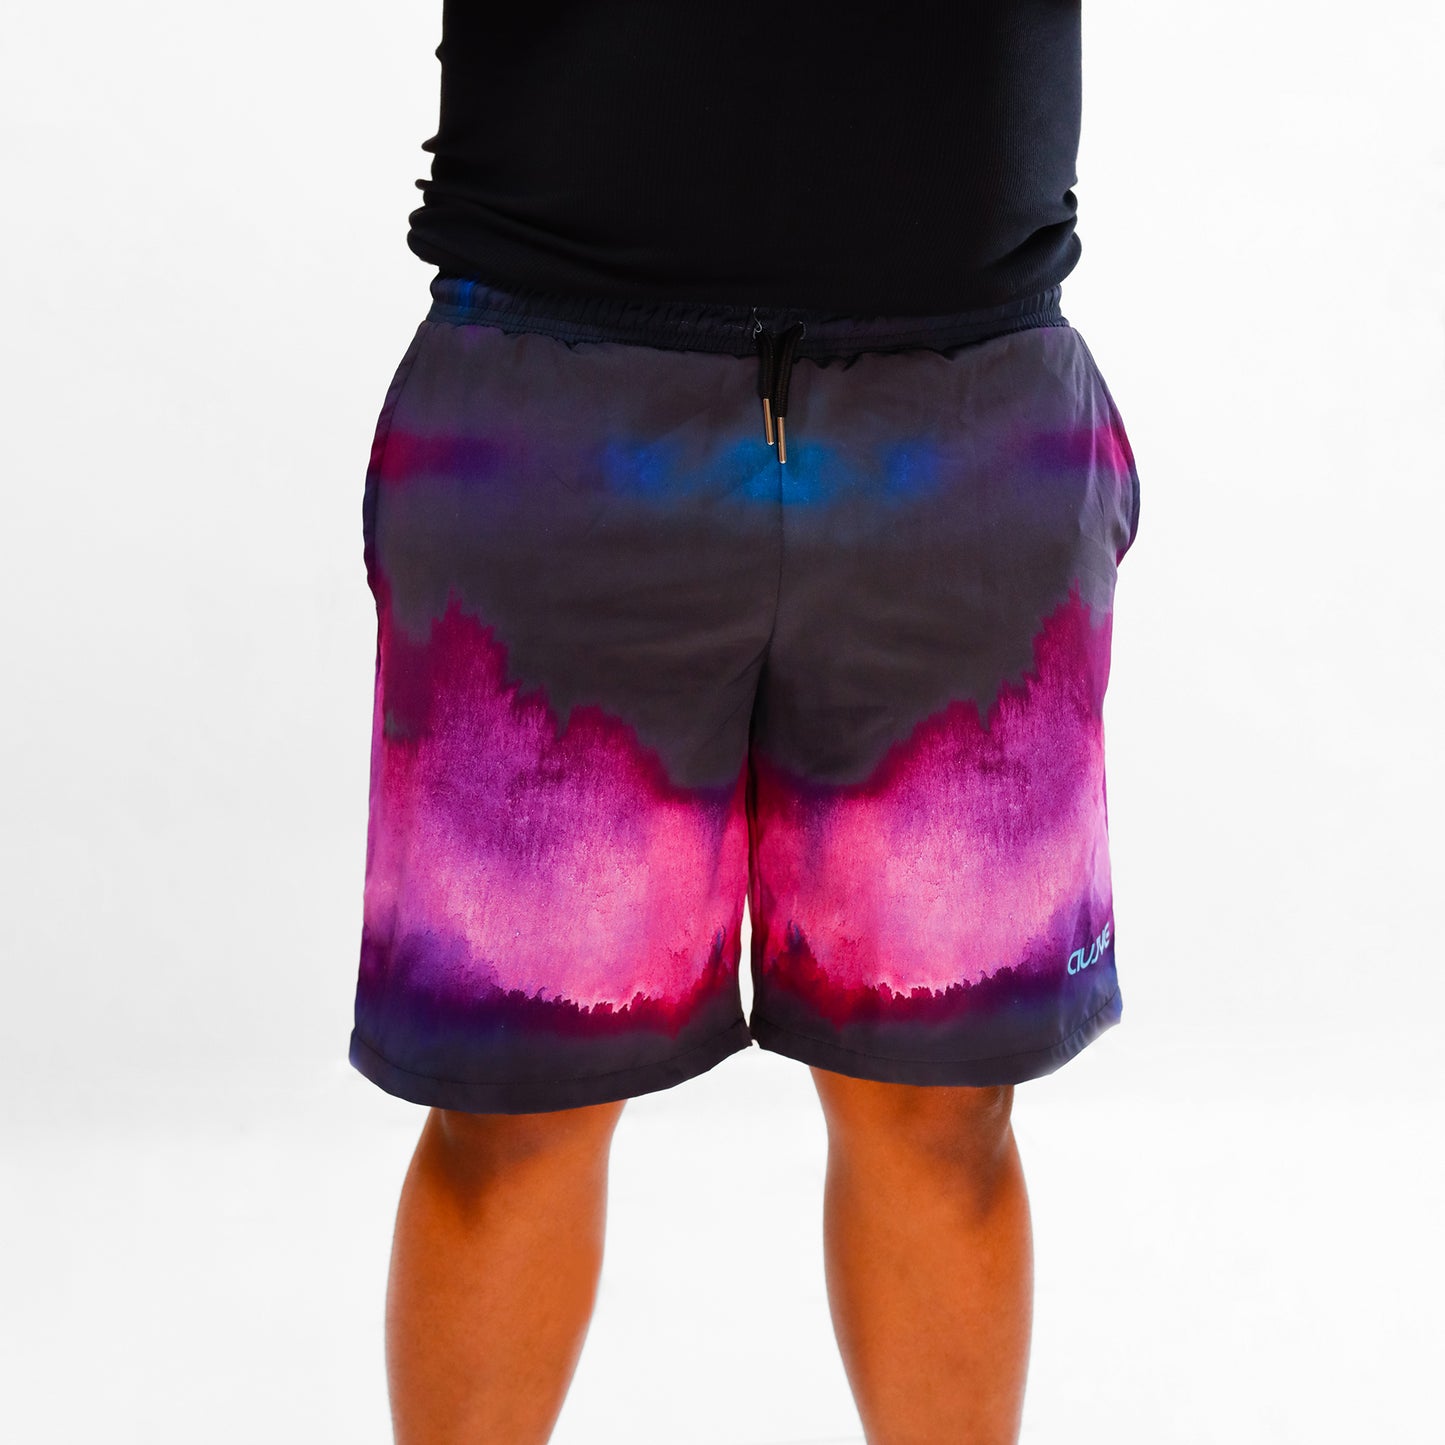 One Miami Men's Men’s Fusion Color Shorts